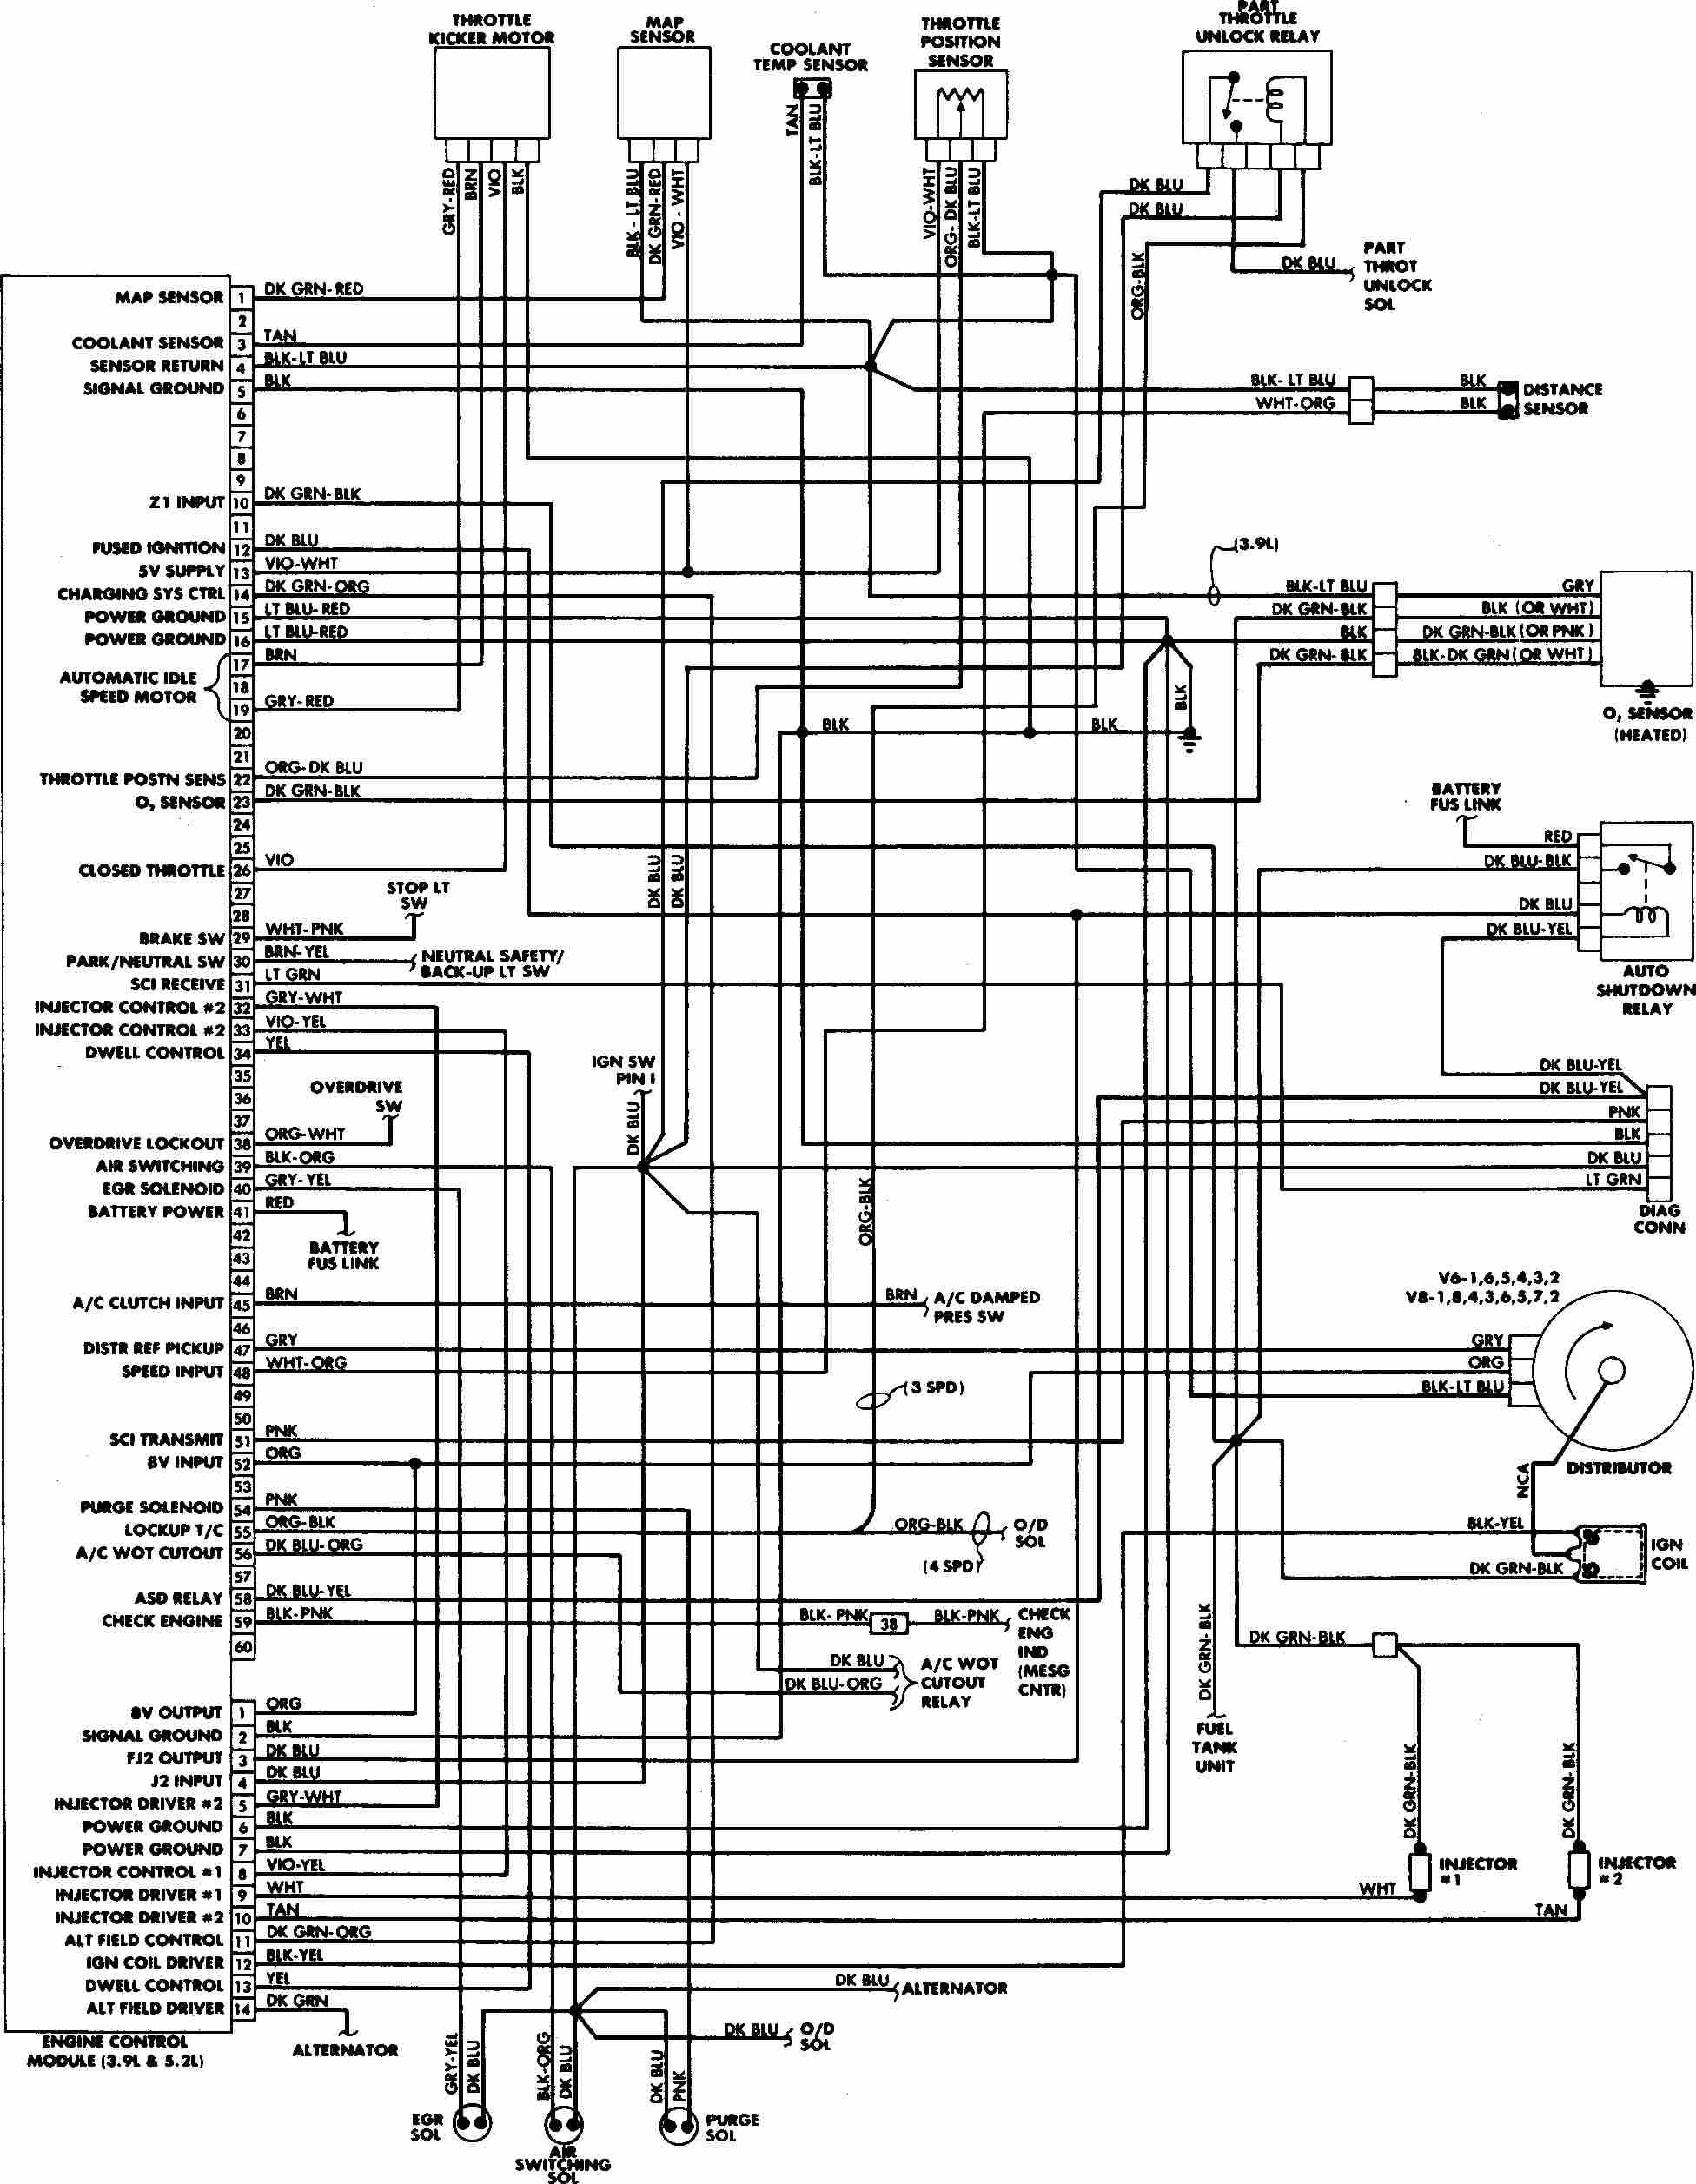 Engine Control Wiring Diagram Of 1988 Dodge W100 Dodge Durango Dodge  - 98 Dodge RAM 1500 Fuel Pump Wiring Diagram